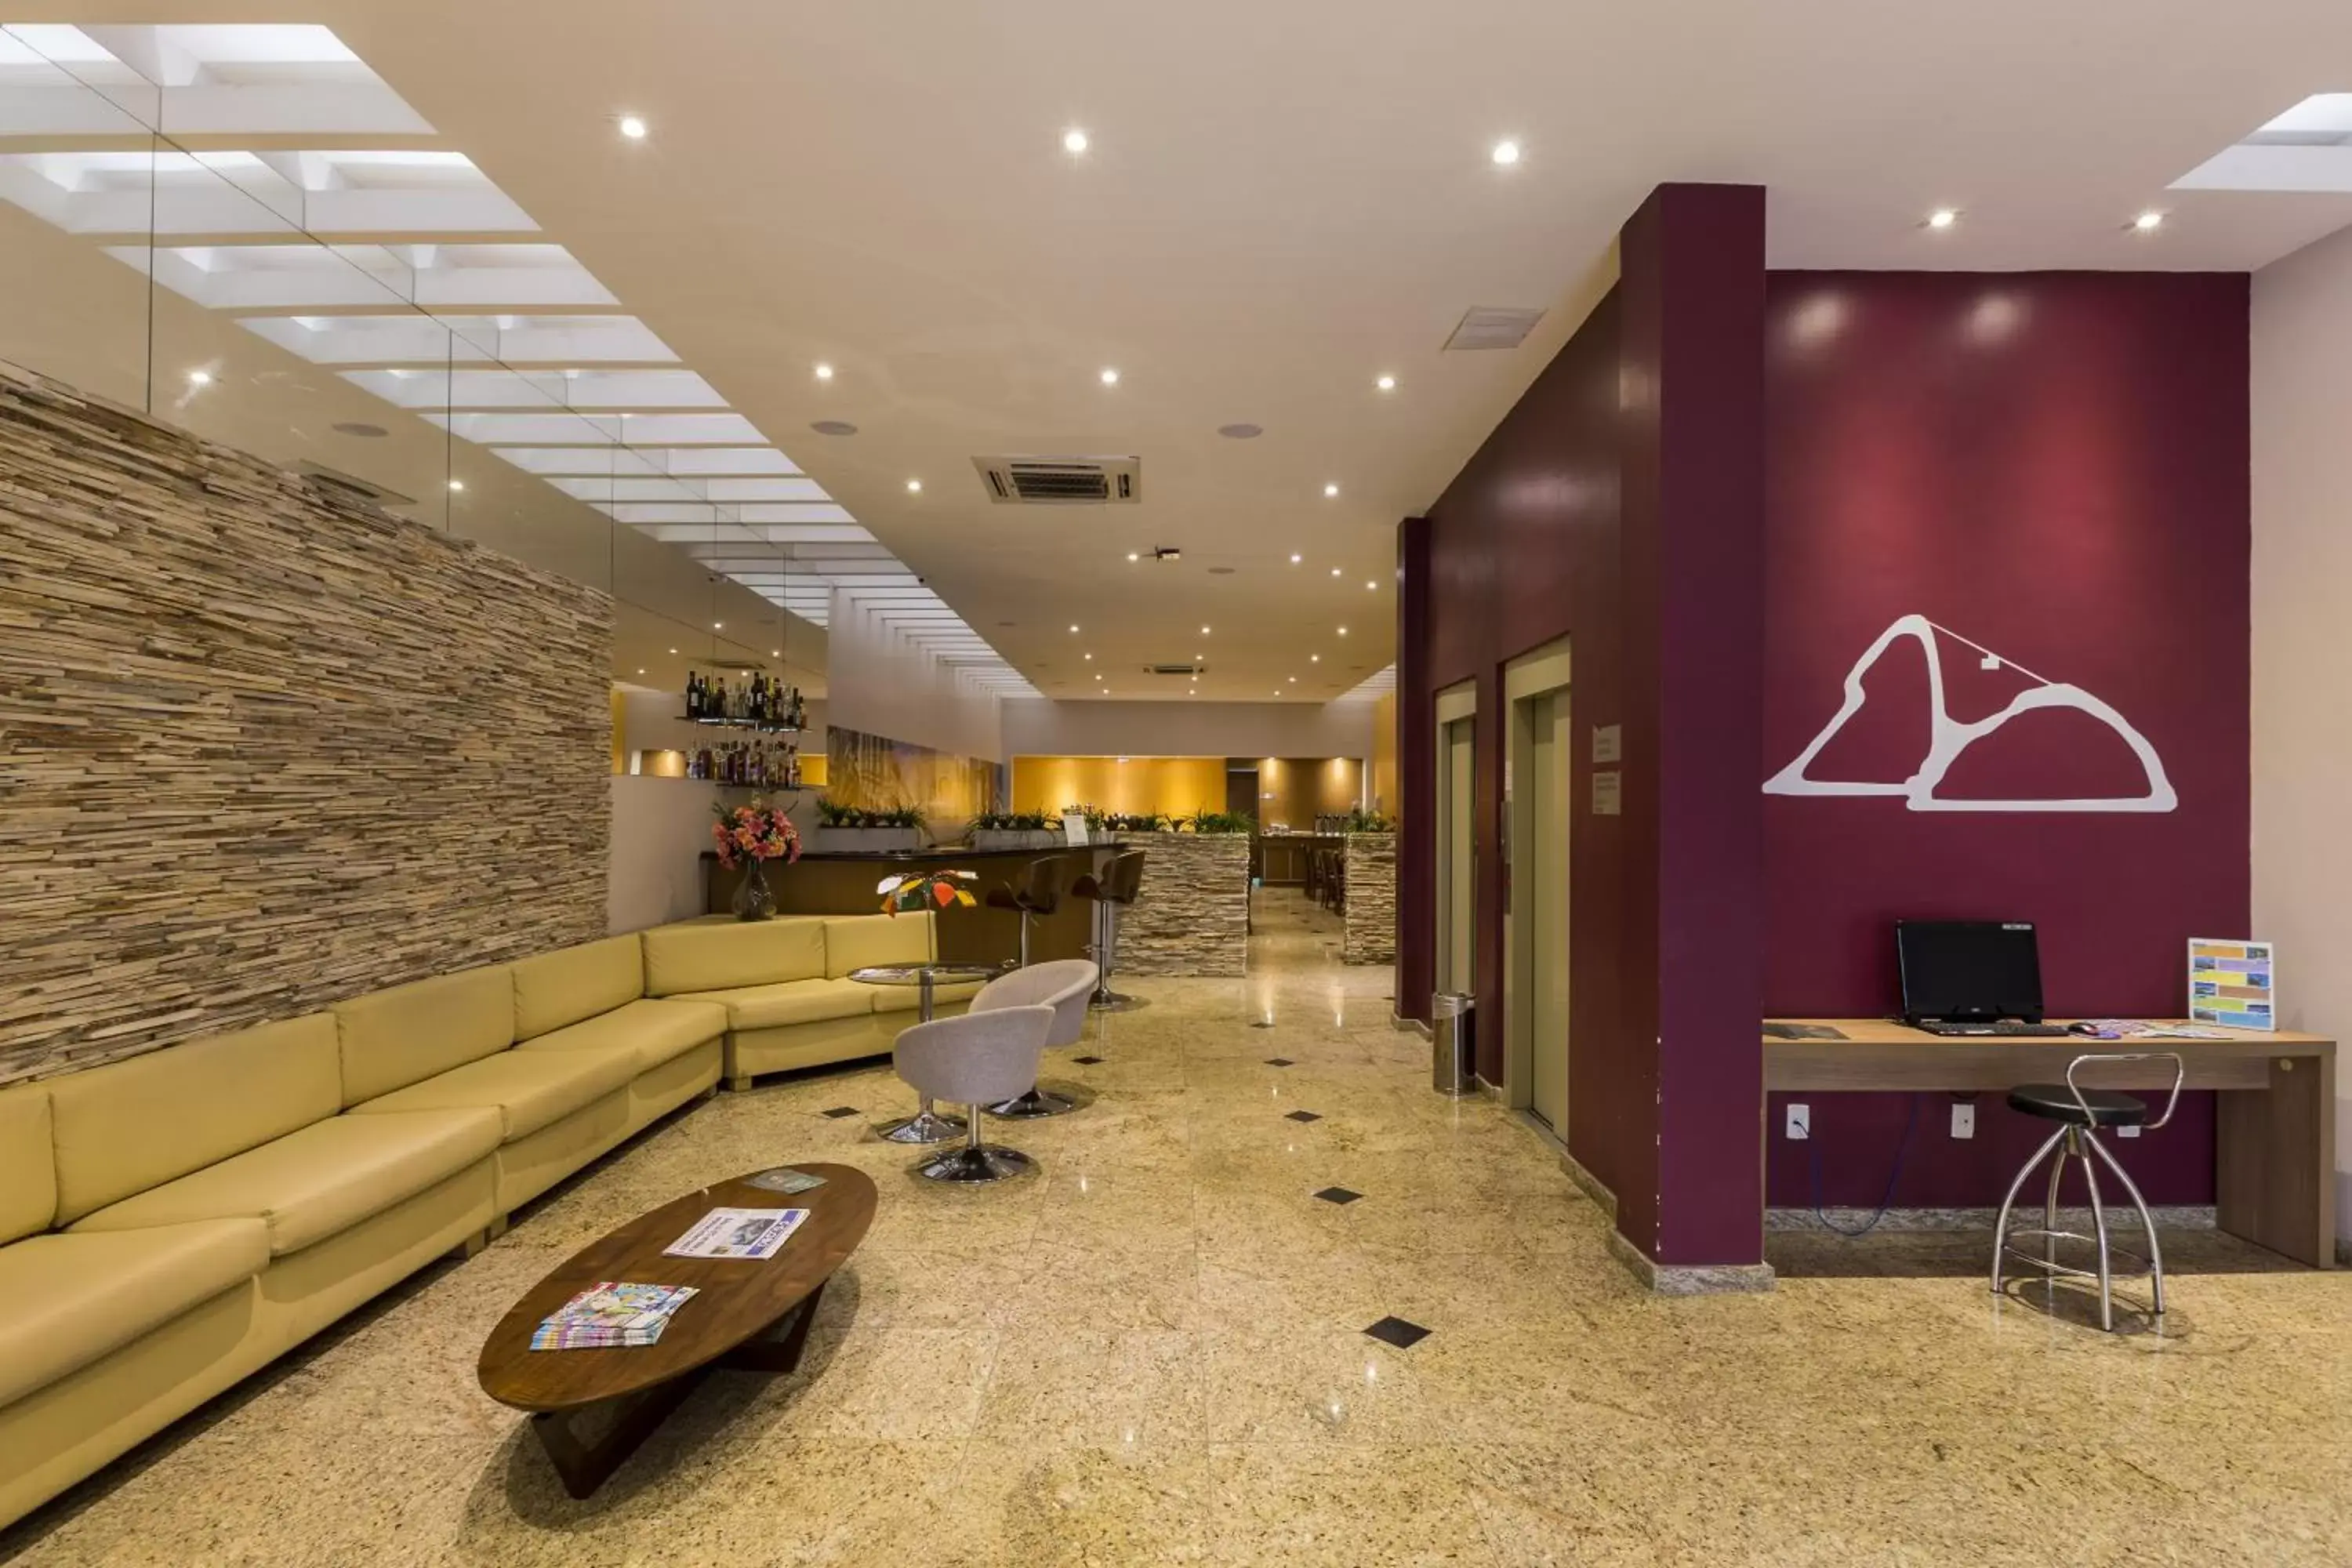 Lobby or reception in Pompeu Rio Hotel